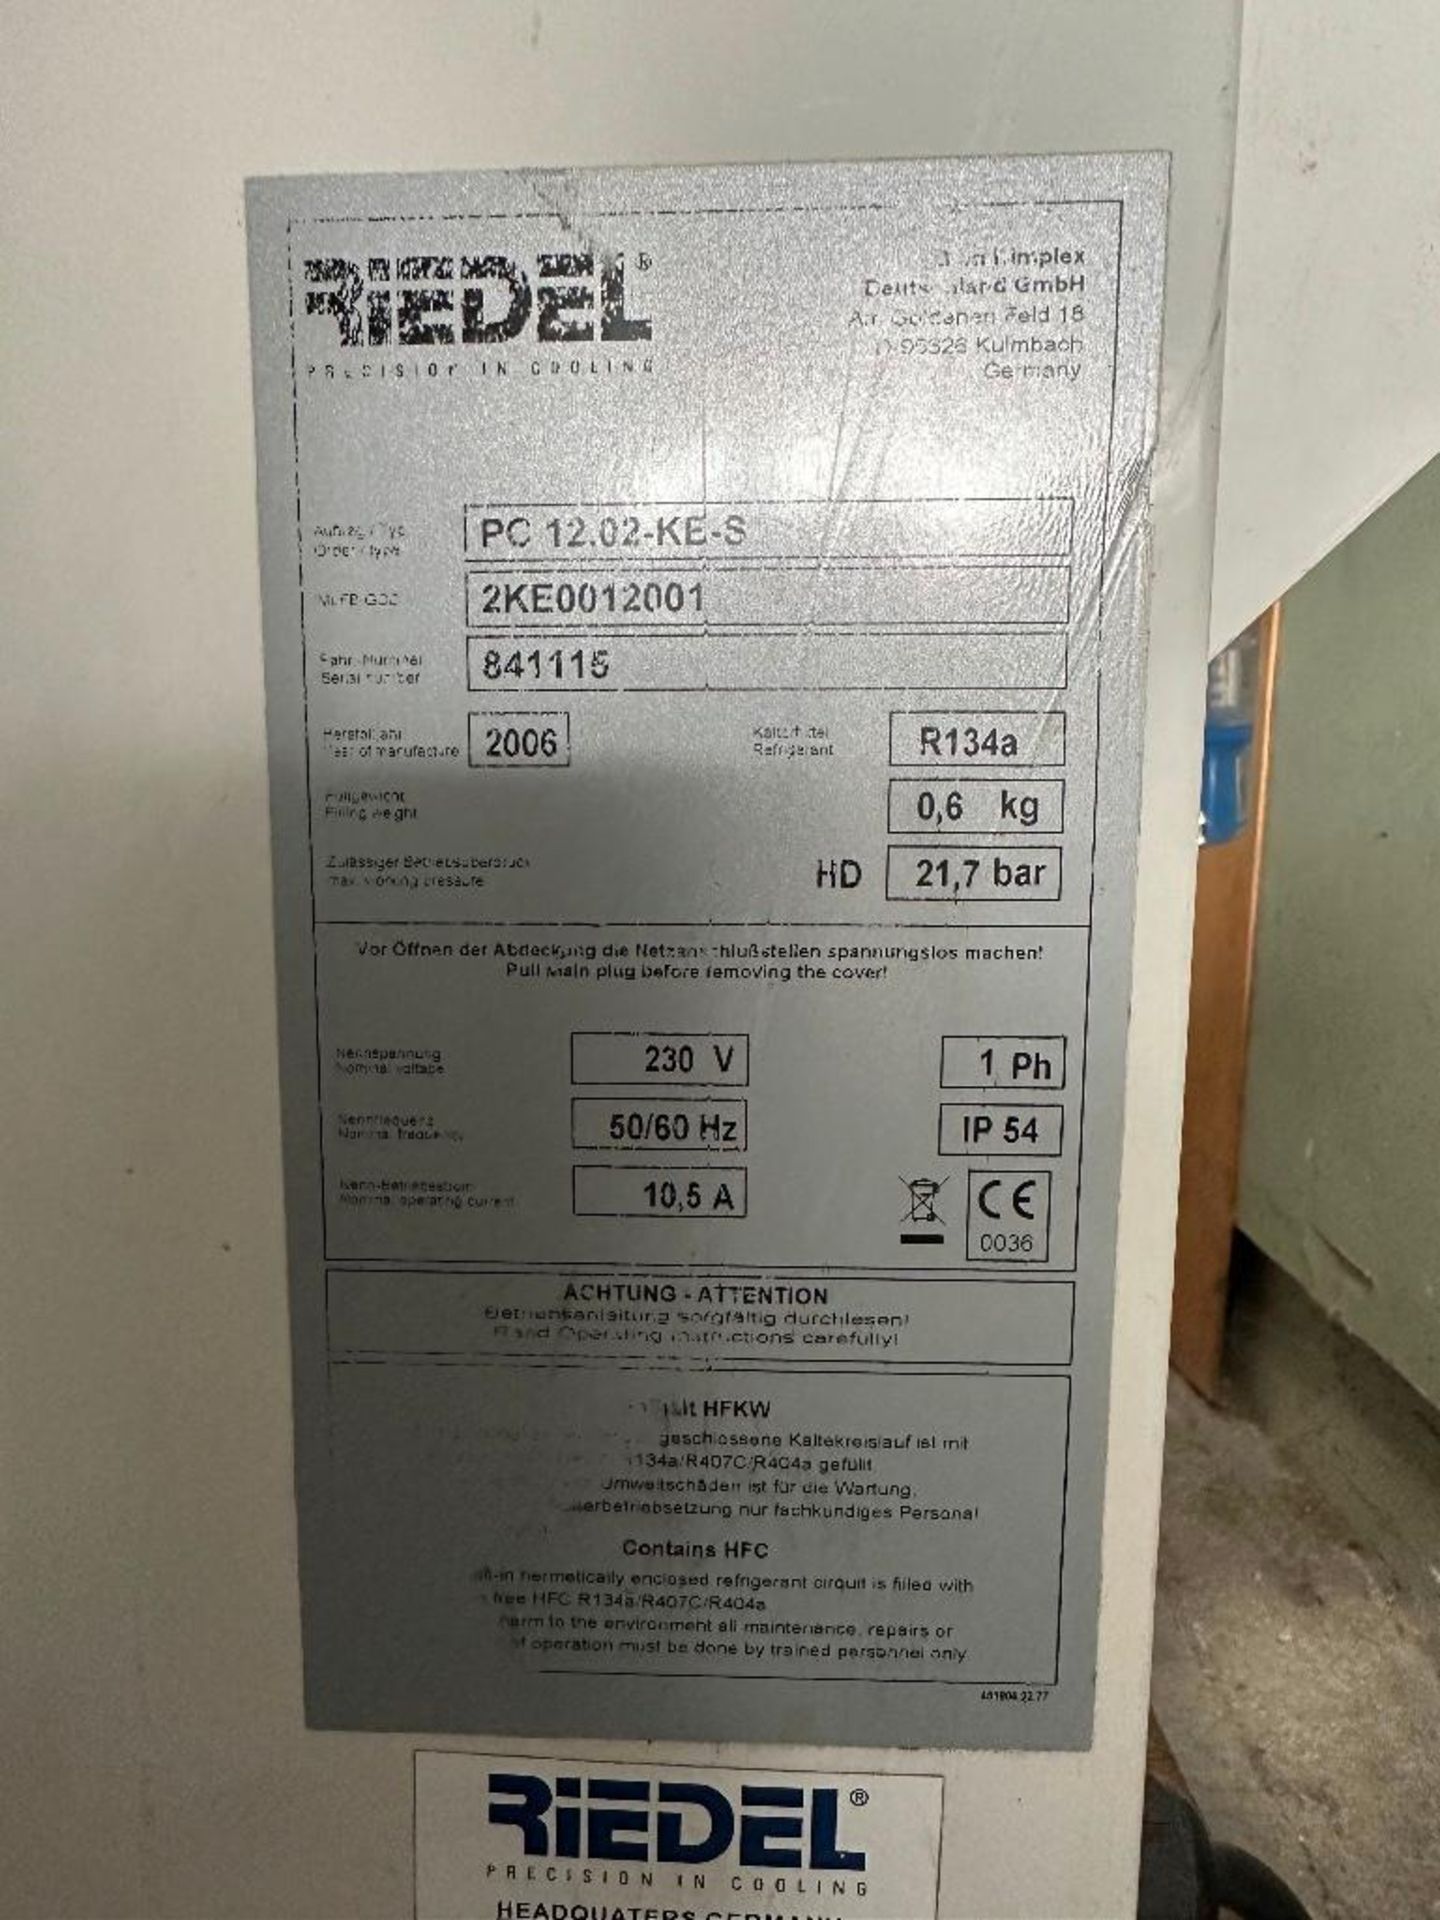 Riedel 2KE0012001 Precision Cooling System, s/n 841115, 2006 - Image 4 of 4